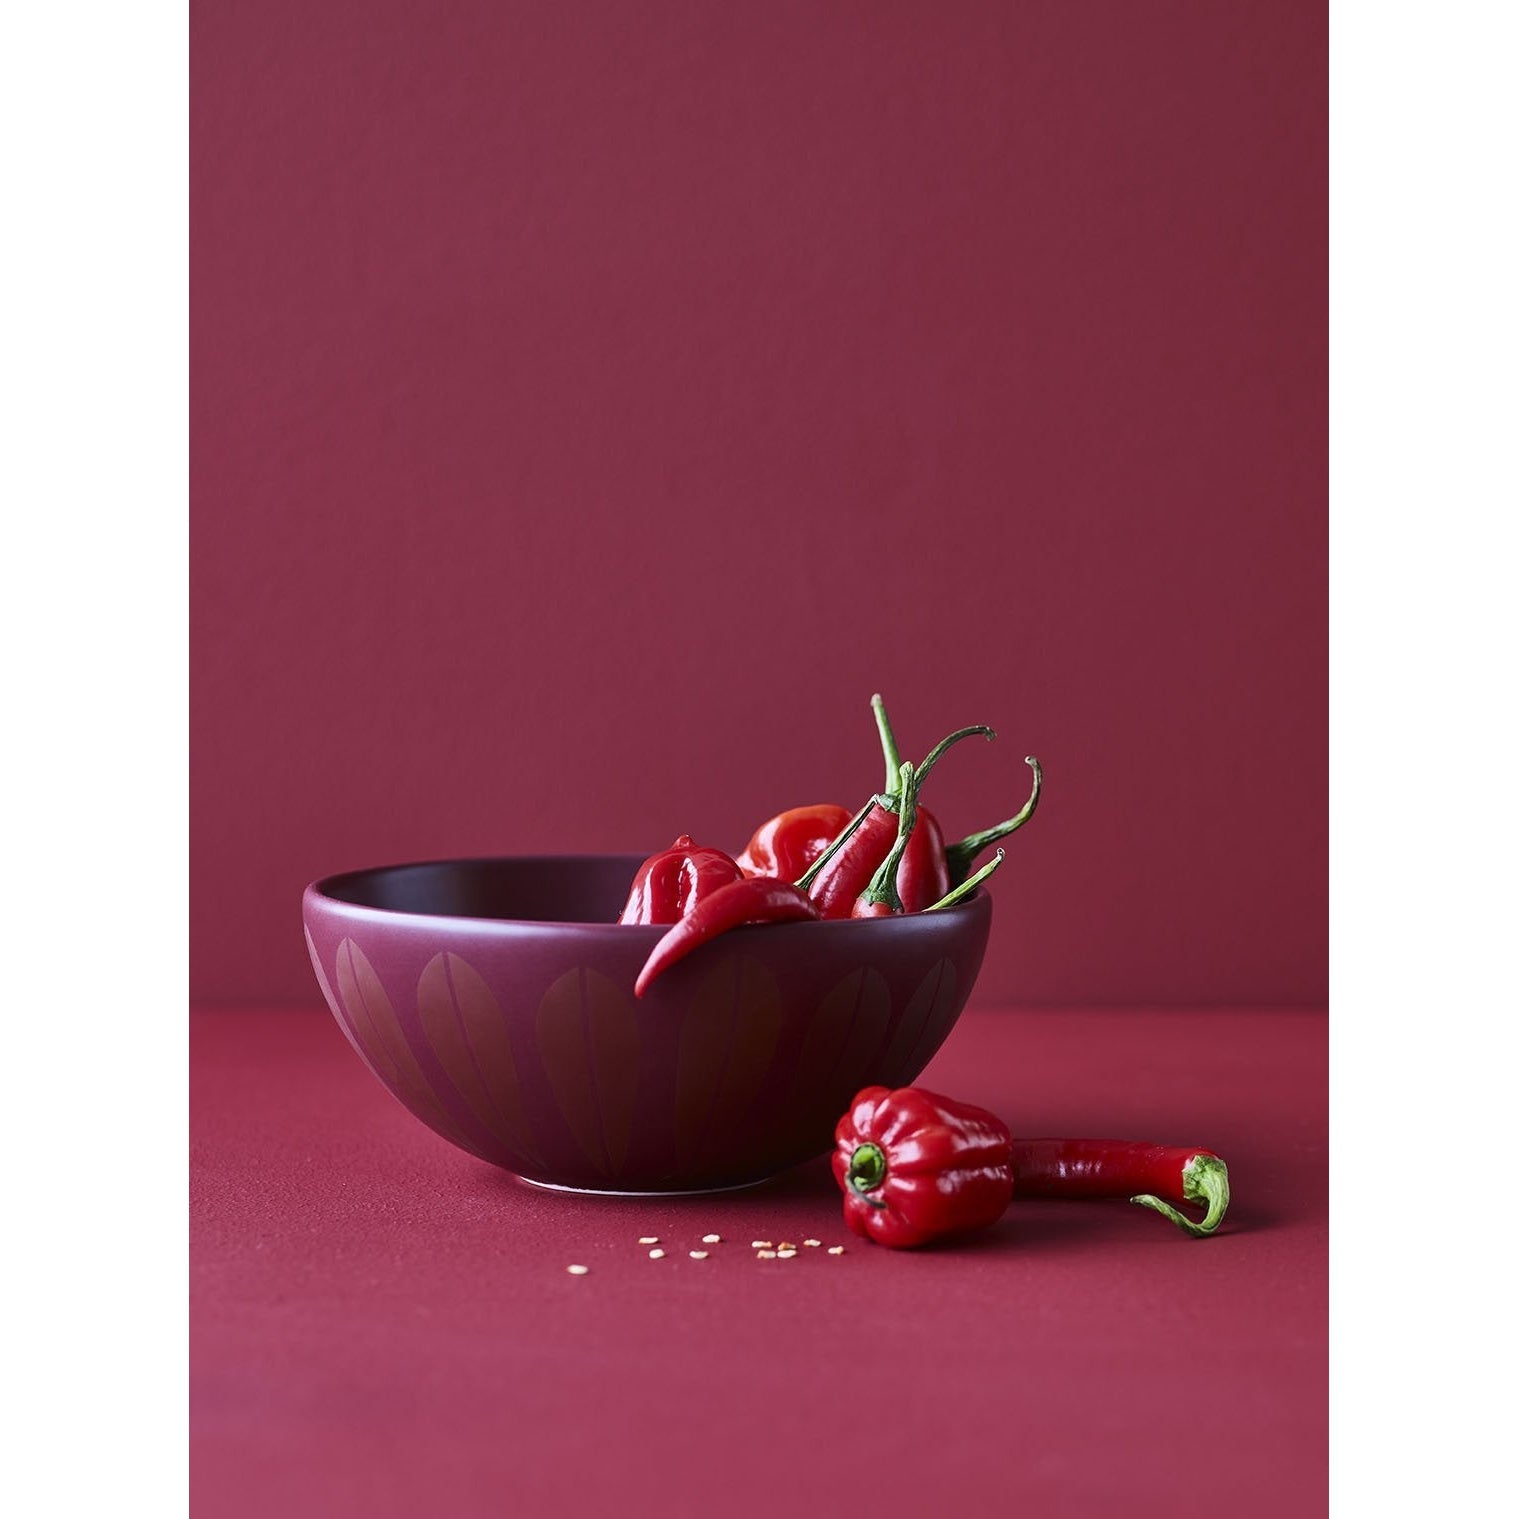 Lucie Kaas Arne Clausen Bowl rojo oscuro, 21 cm